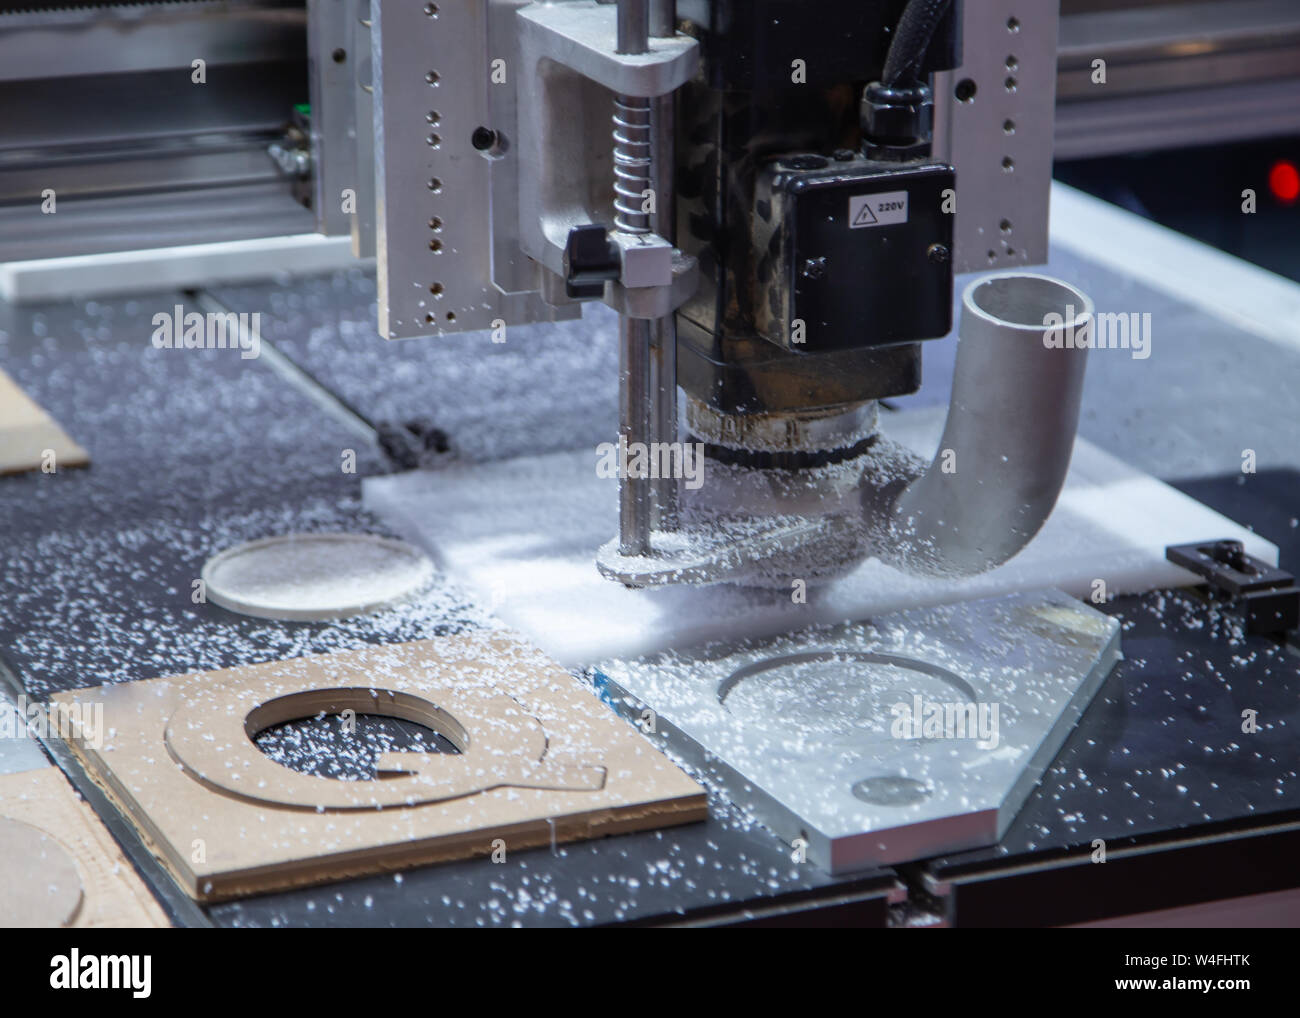 CNC-Laser Graviermaschine carving Alphabet auf Kunststoff Platte  Stockfotografie - Alamy